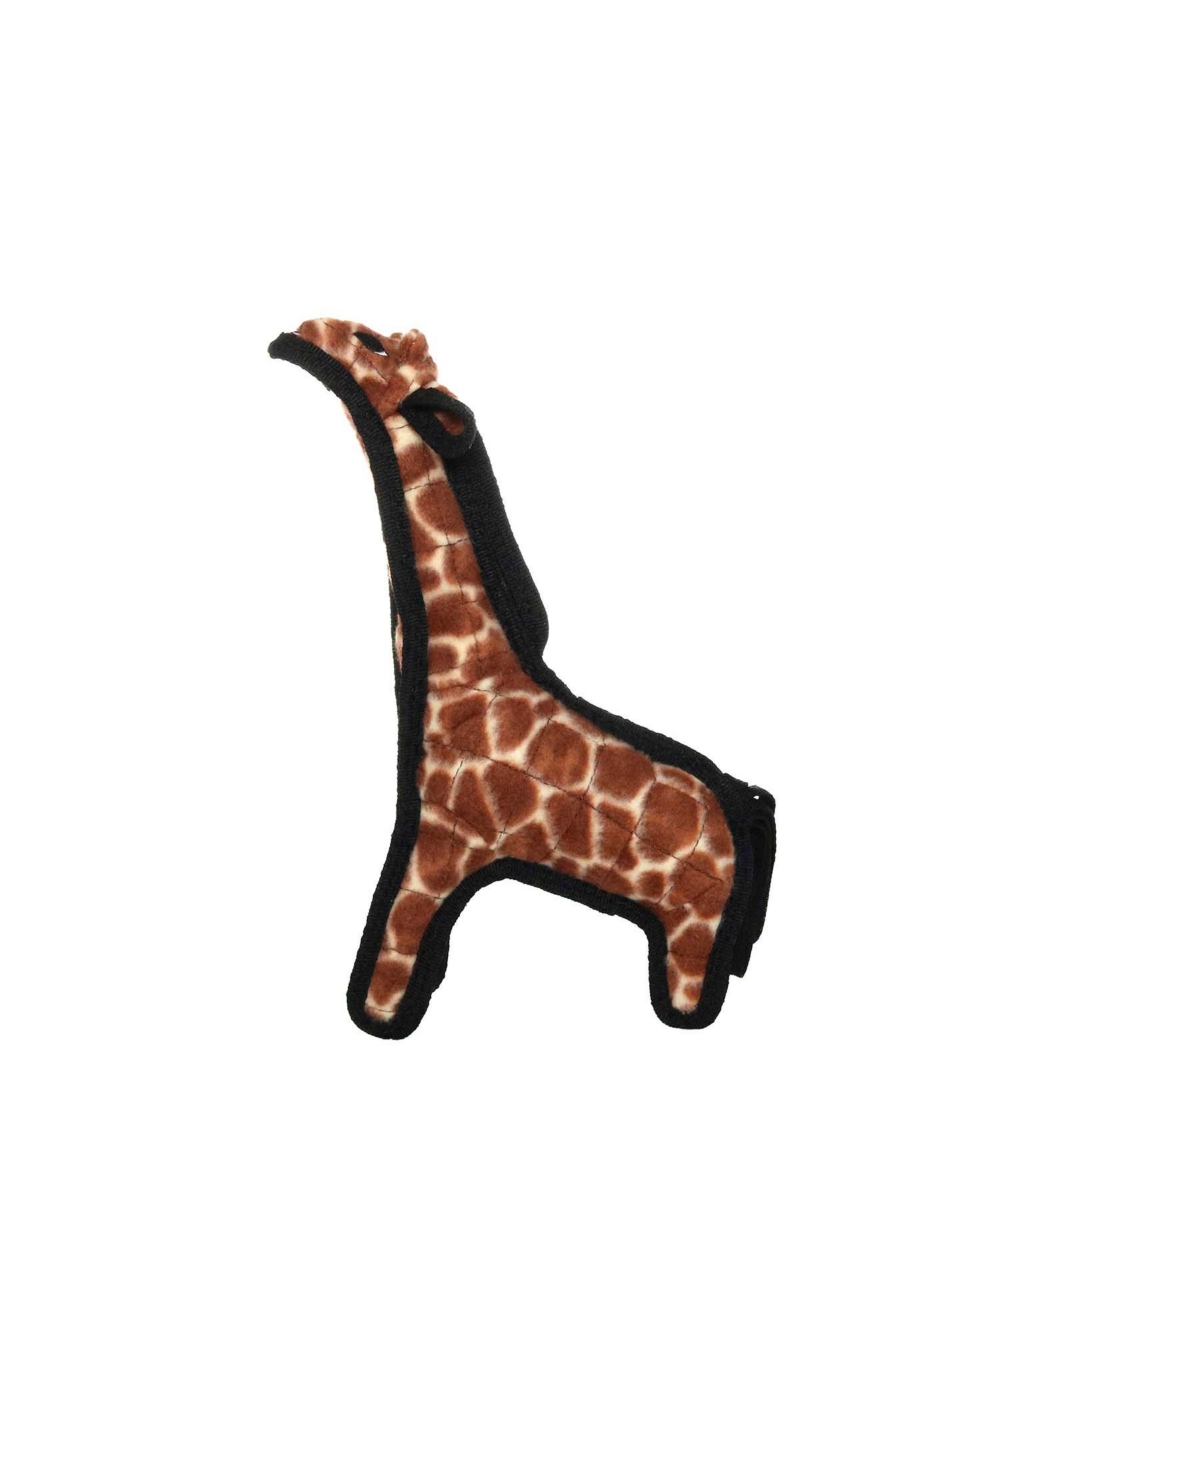 Jr Zoo Giraffe, Dog Toy - Brown